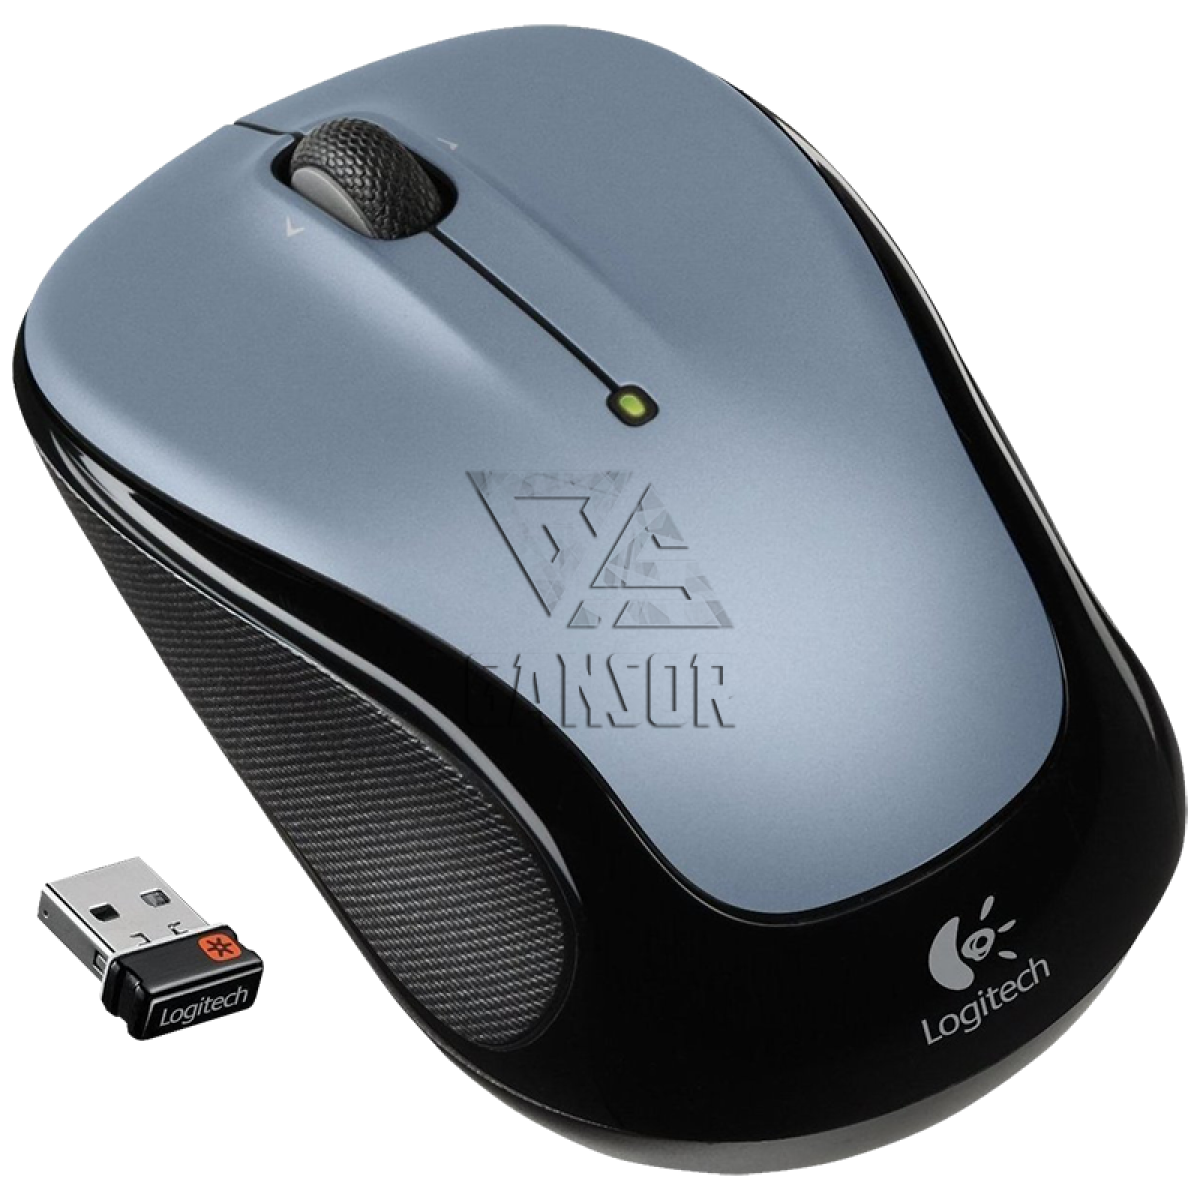 Какая беспроводная мышь лучше. Logitech Wireless Mouse m325. Logitech беспроводная мышь ь325. Logitech m325 Limited. Мышь беспроводная Logitech m325 Dark Silver.